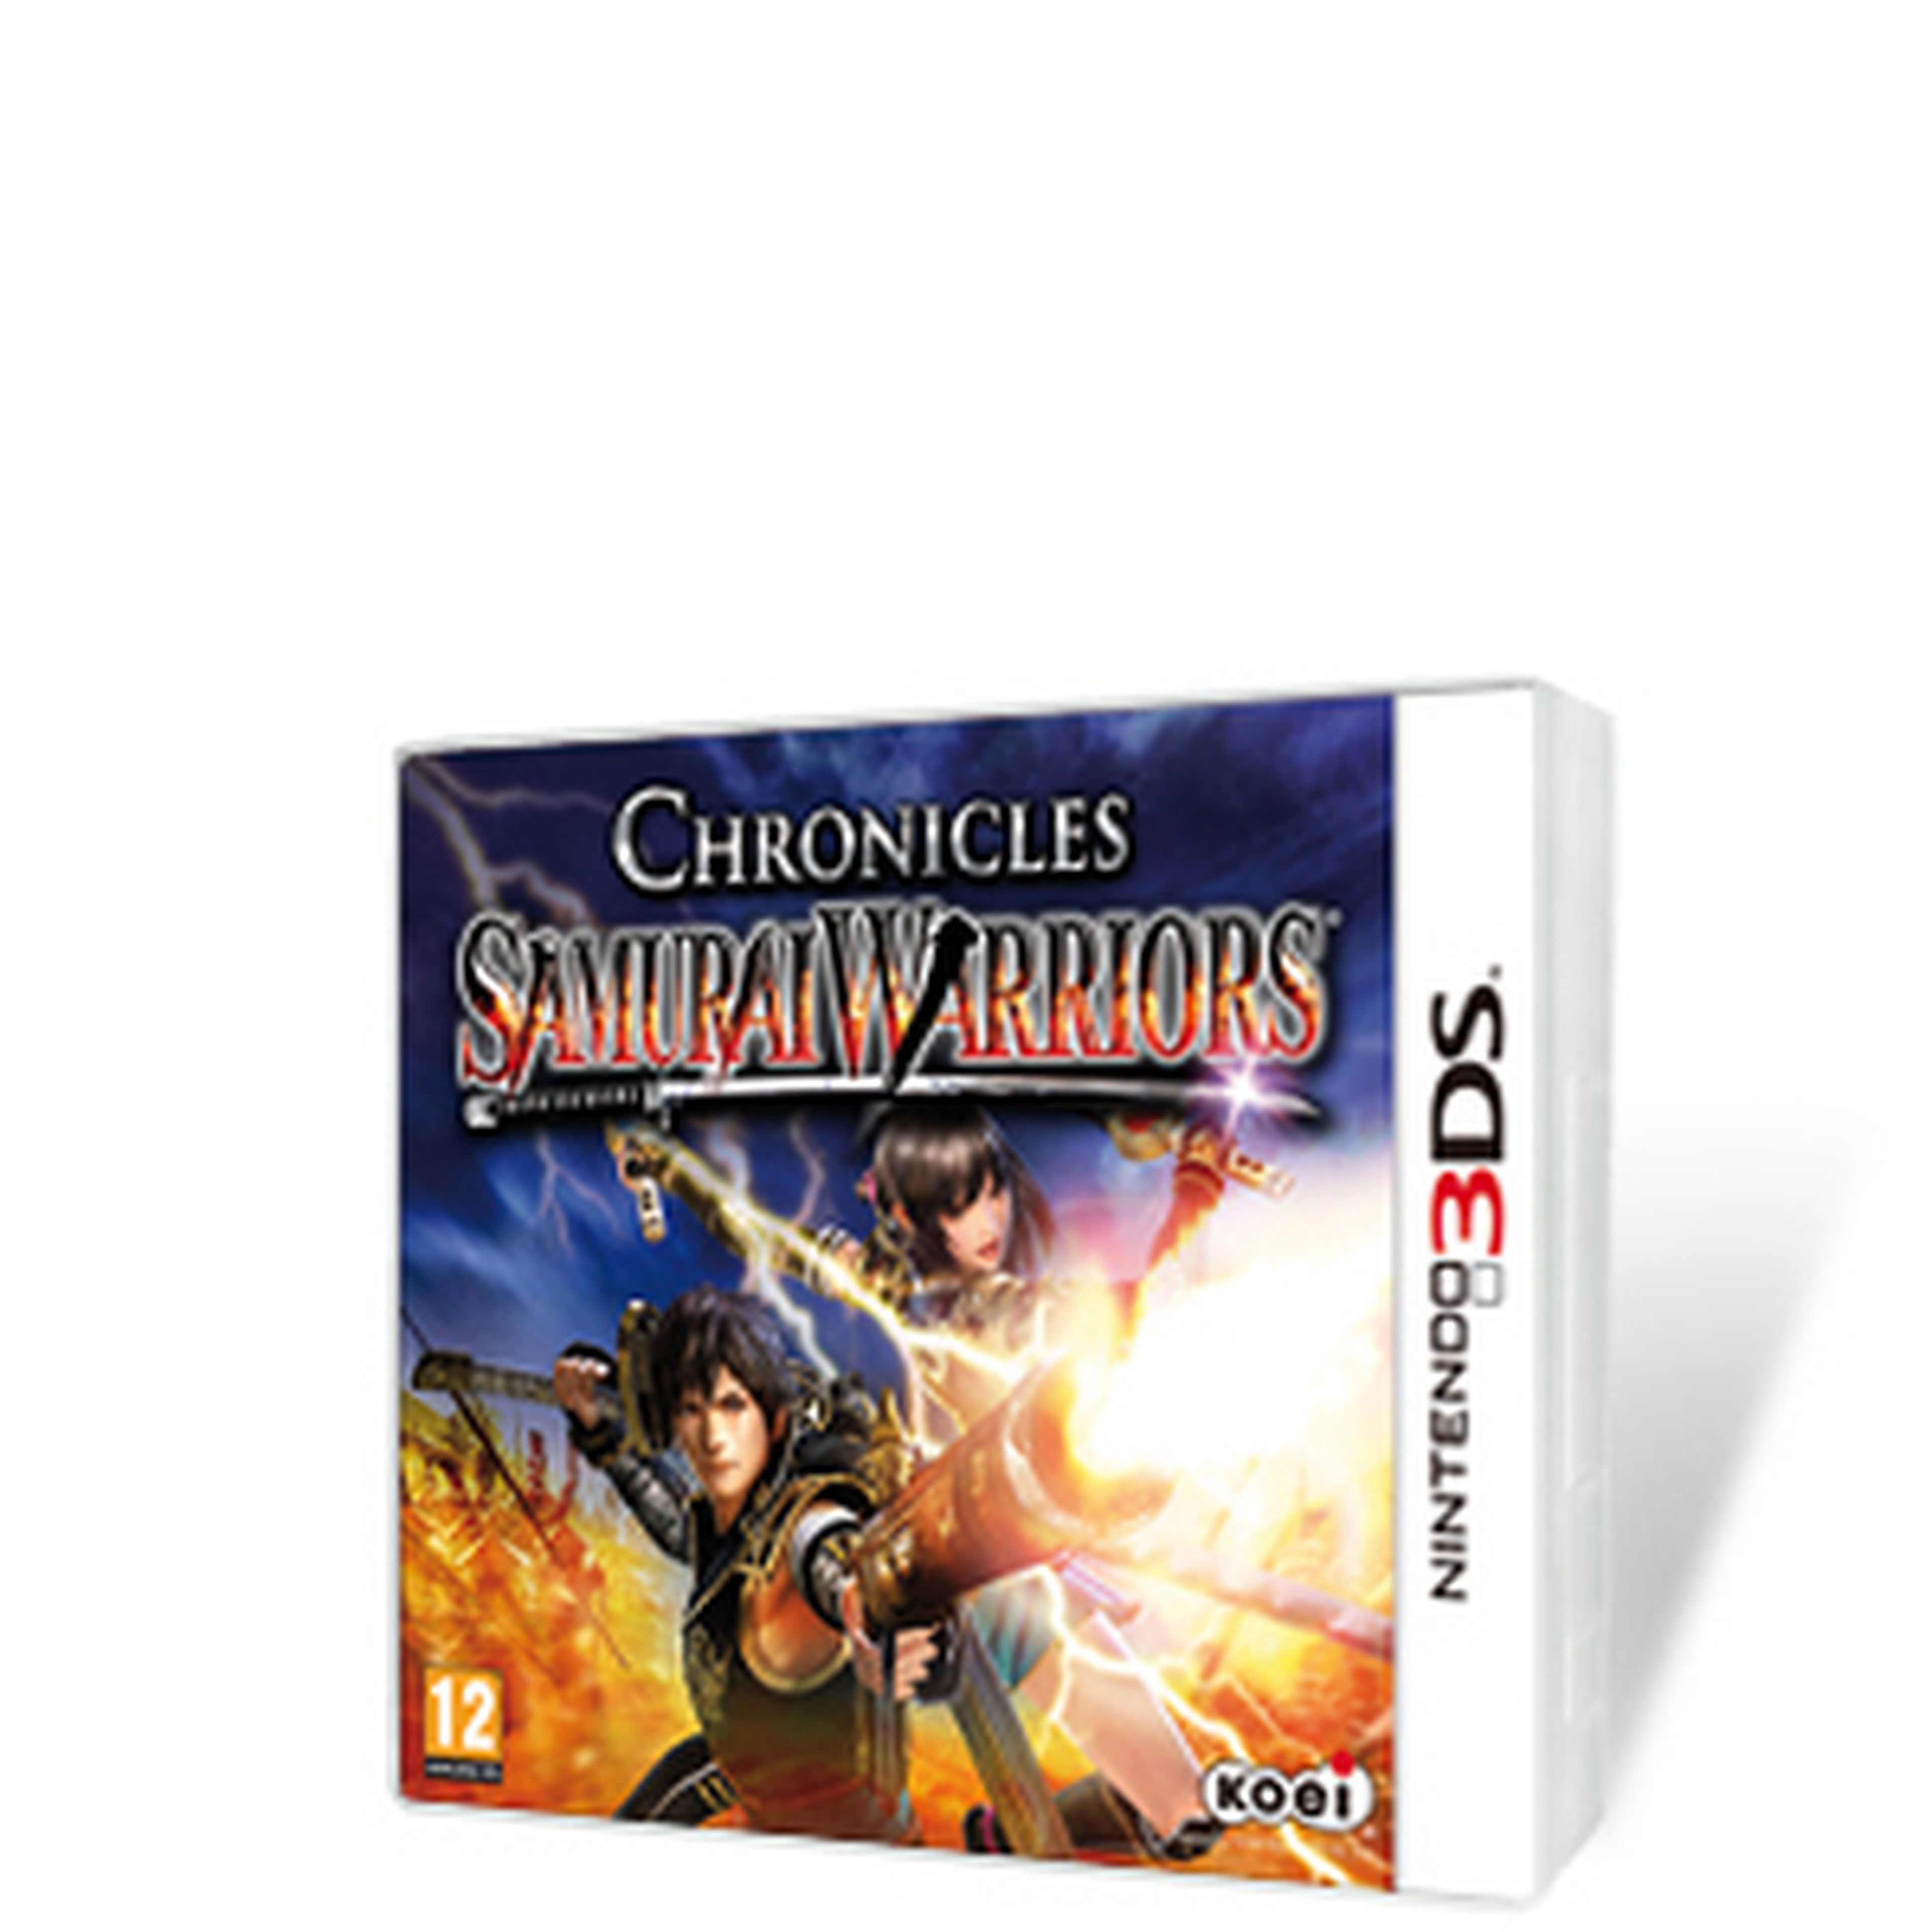 Samurai Warriors: Chronicles para 3DS